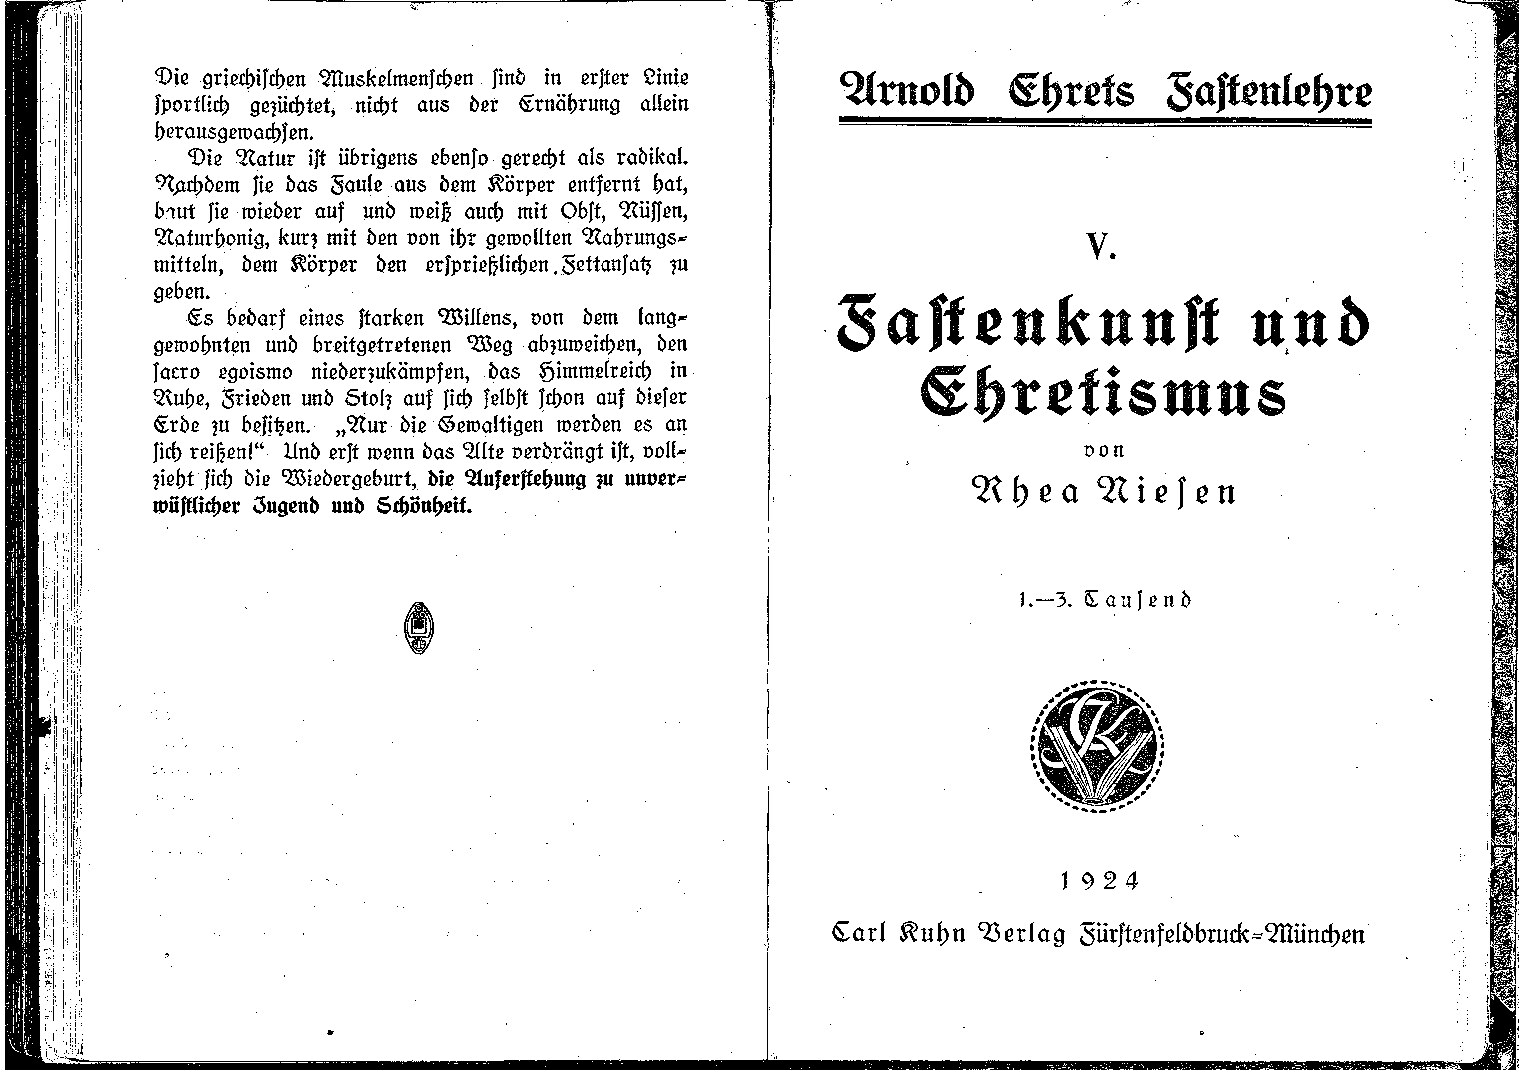 Fastenlehre - V. Teil - Fastenkunst und Ehretismus (1924, 14 Doppels., Scan, Fraktur)